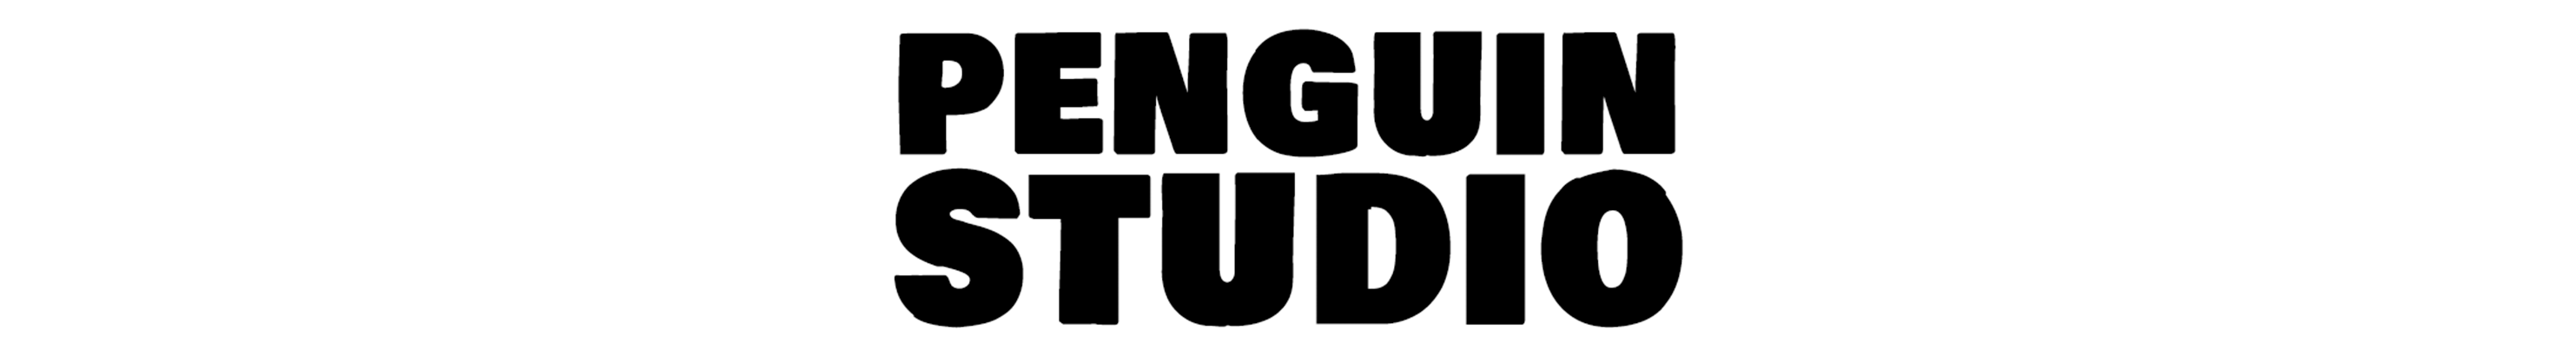 Penguin Studio's profile banner